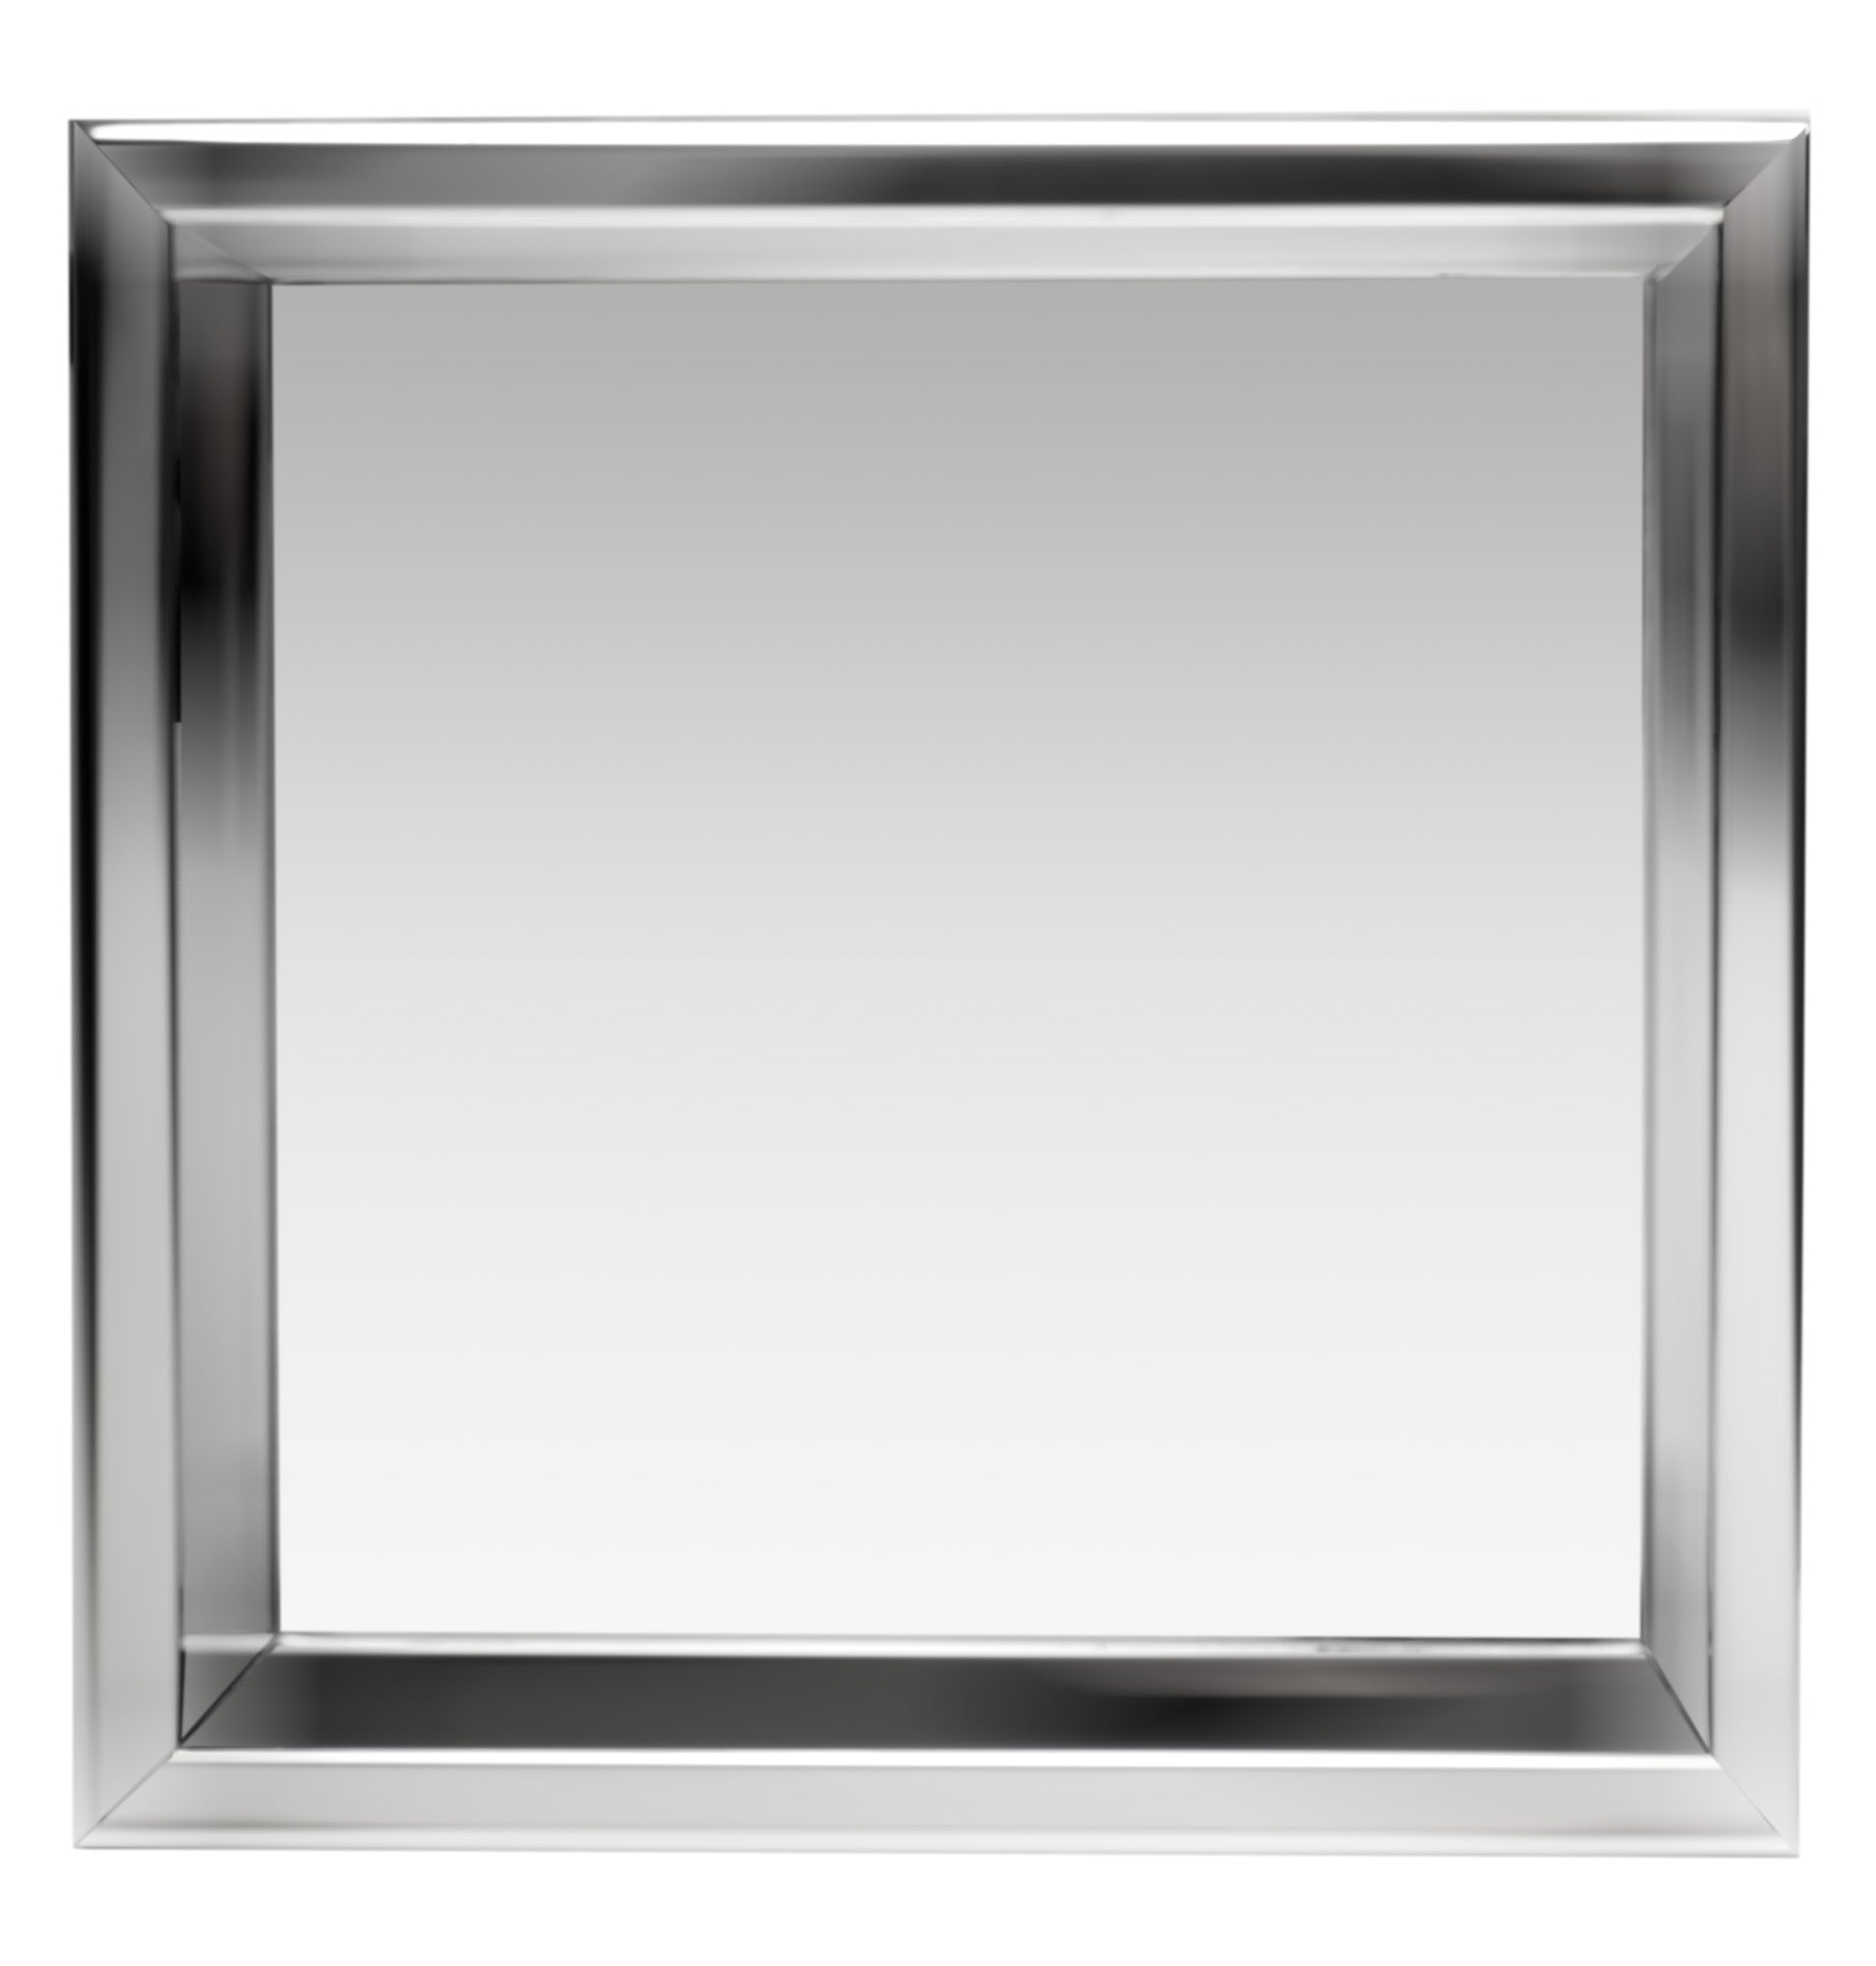 ALFI Brand - 12 x 12 Polished Stainless Steel Square Single Shelf Bath Shower Niche | ABN1212-PSS